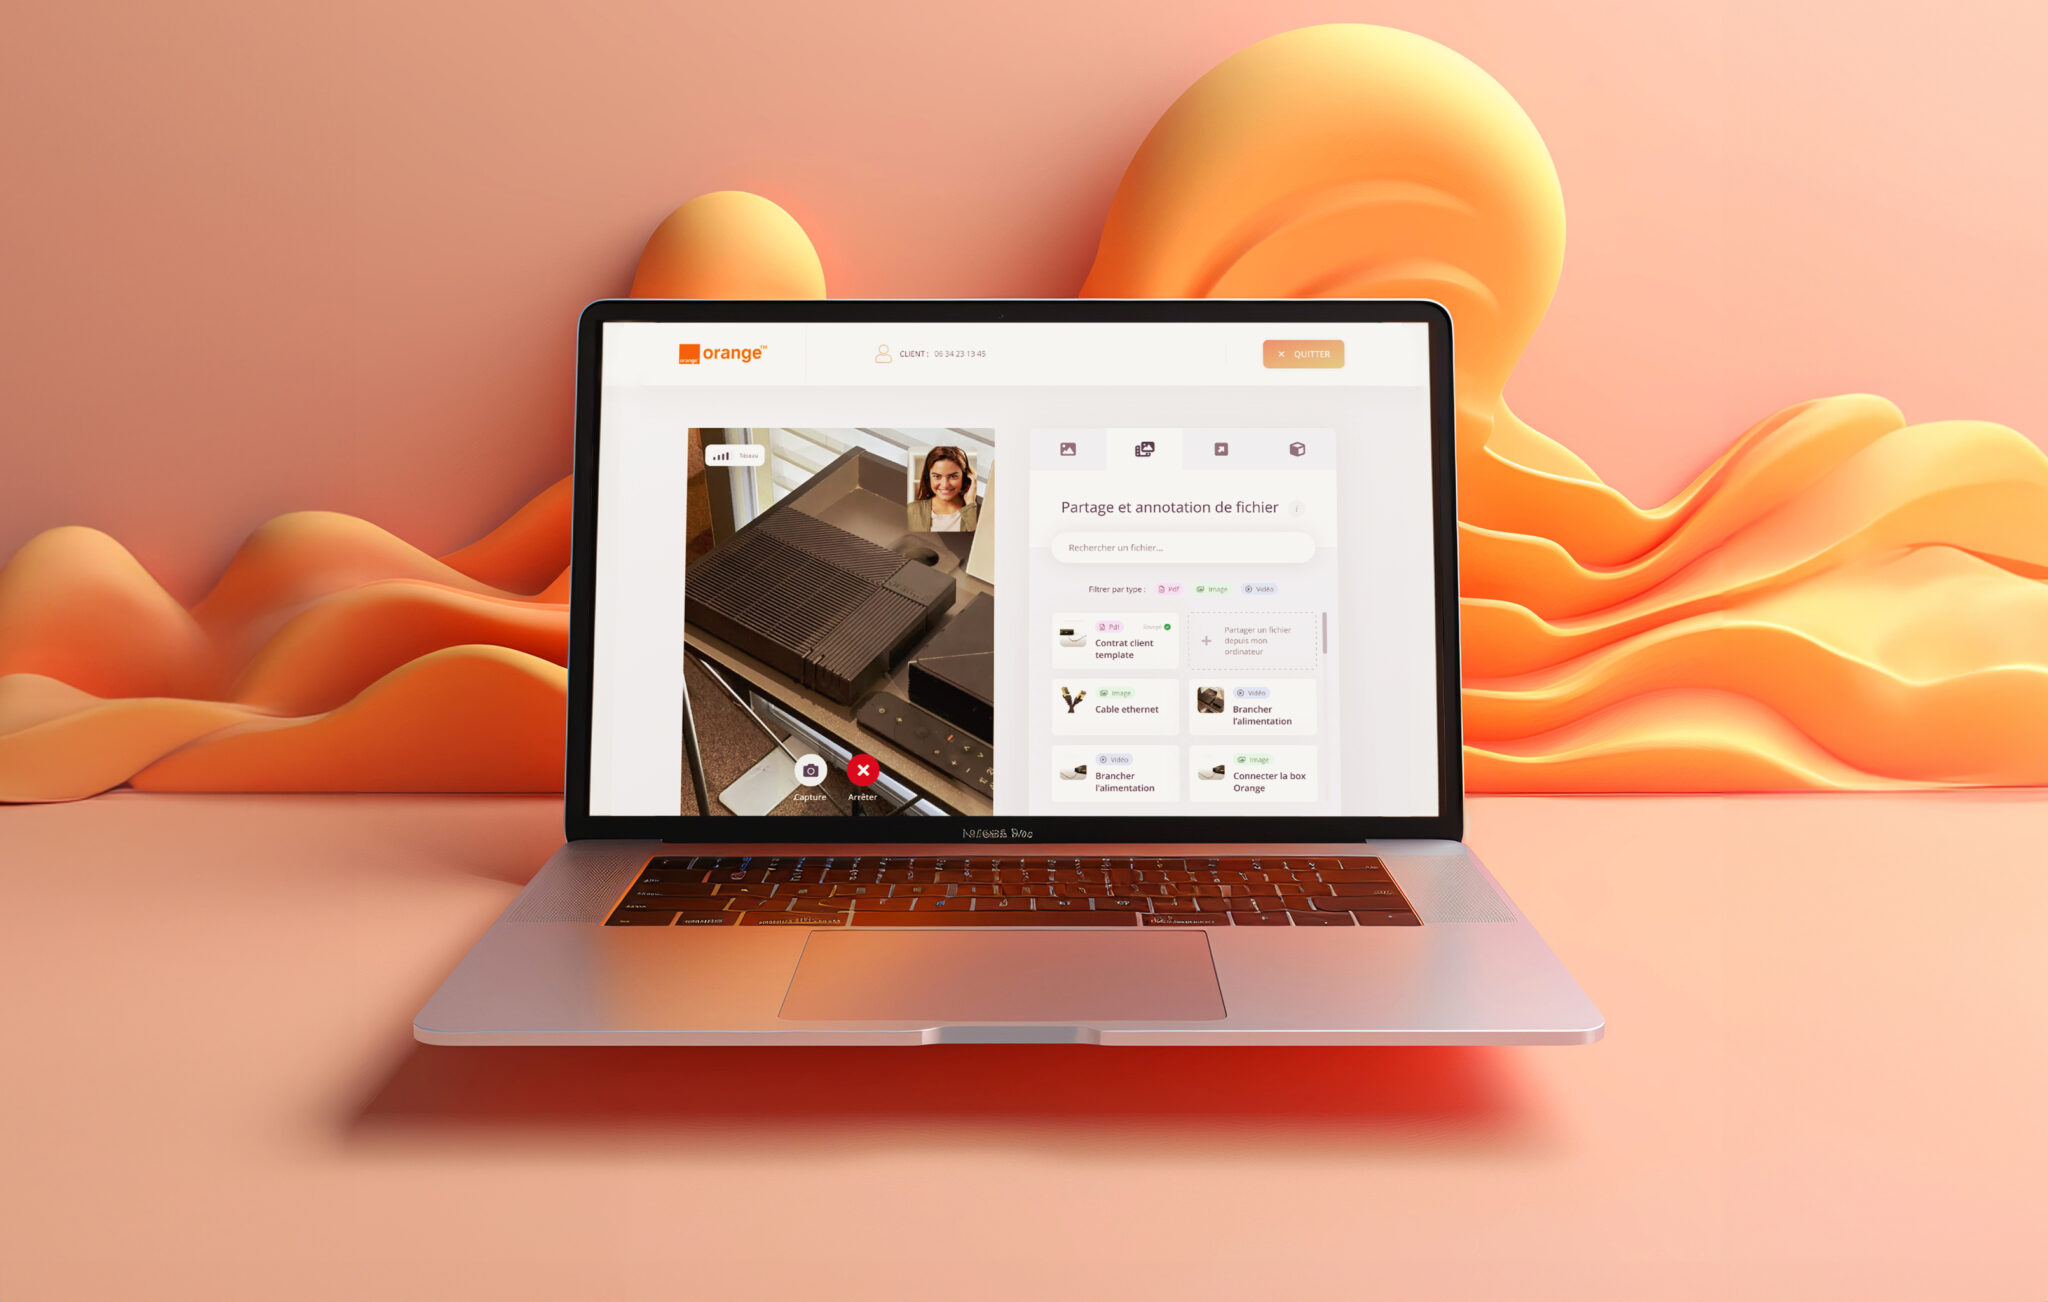 Macbook pro mockup of orange interface